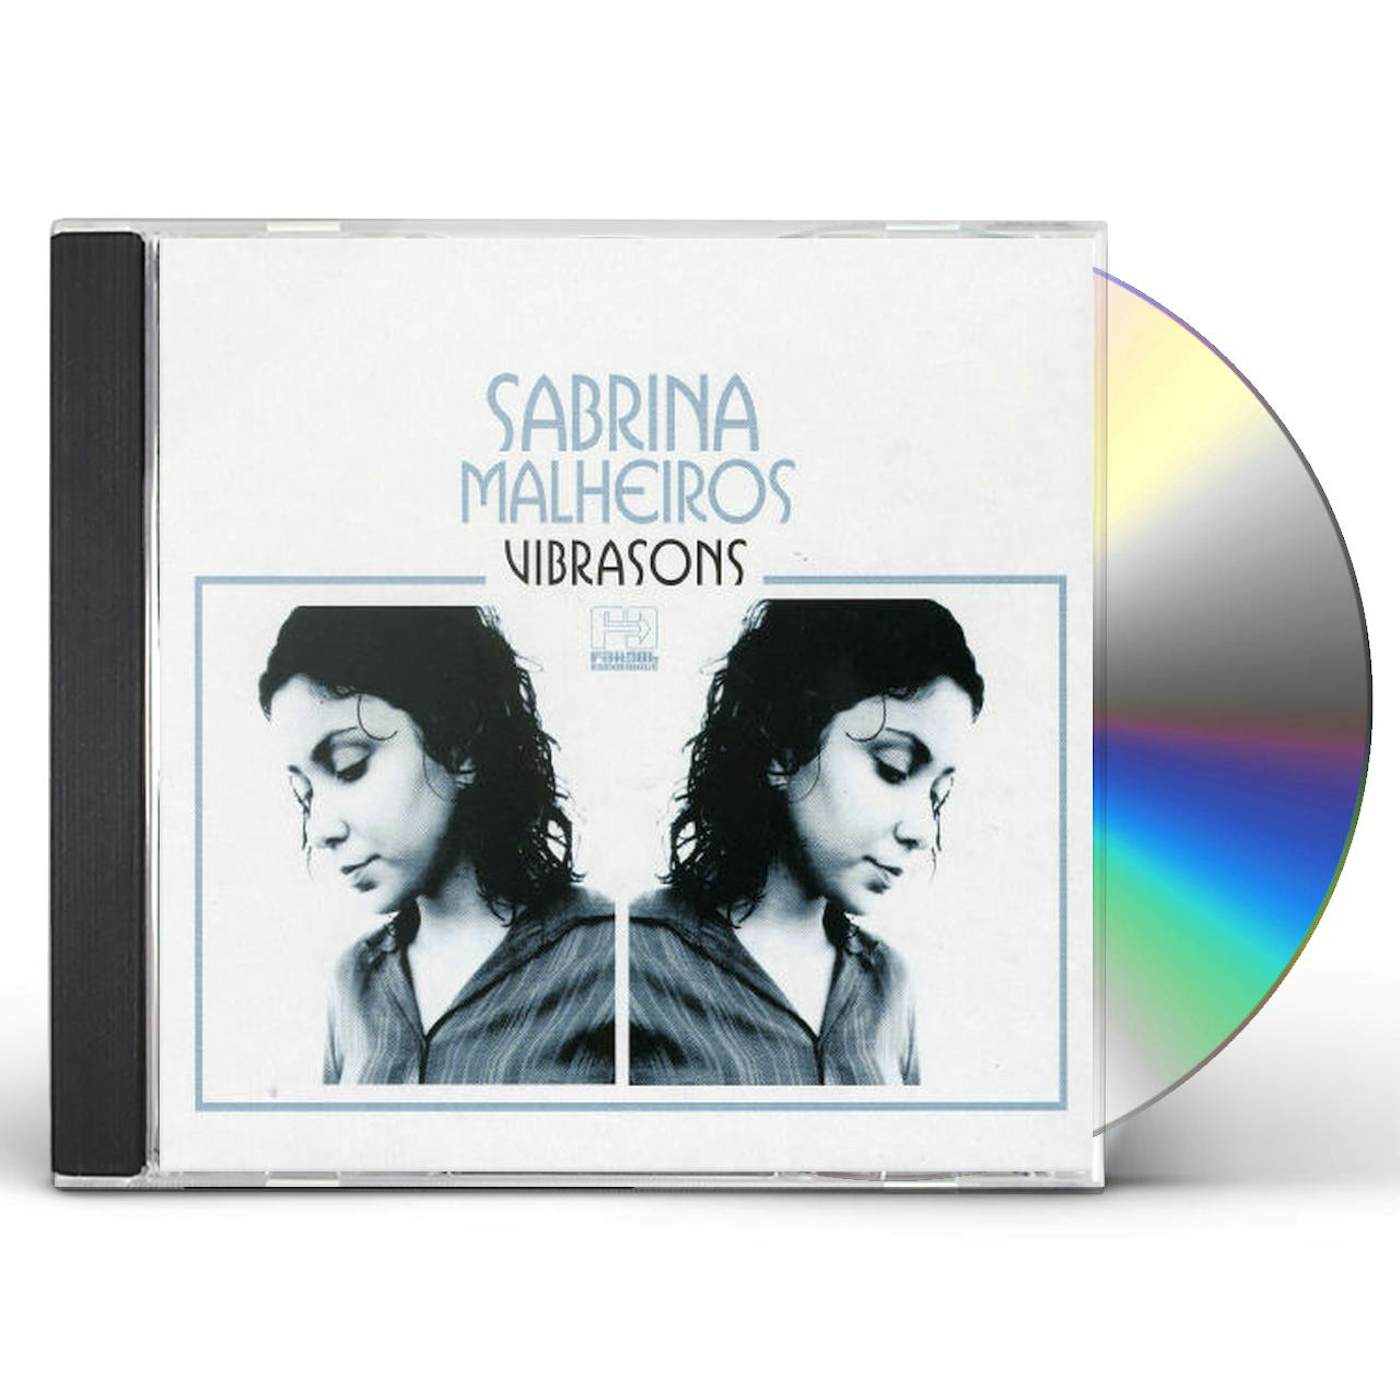 Sabrina Malheiros VIBRASONS CD